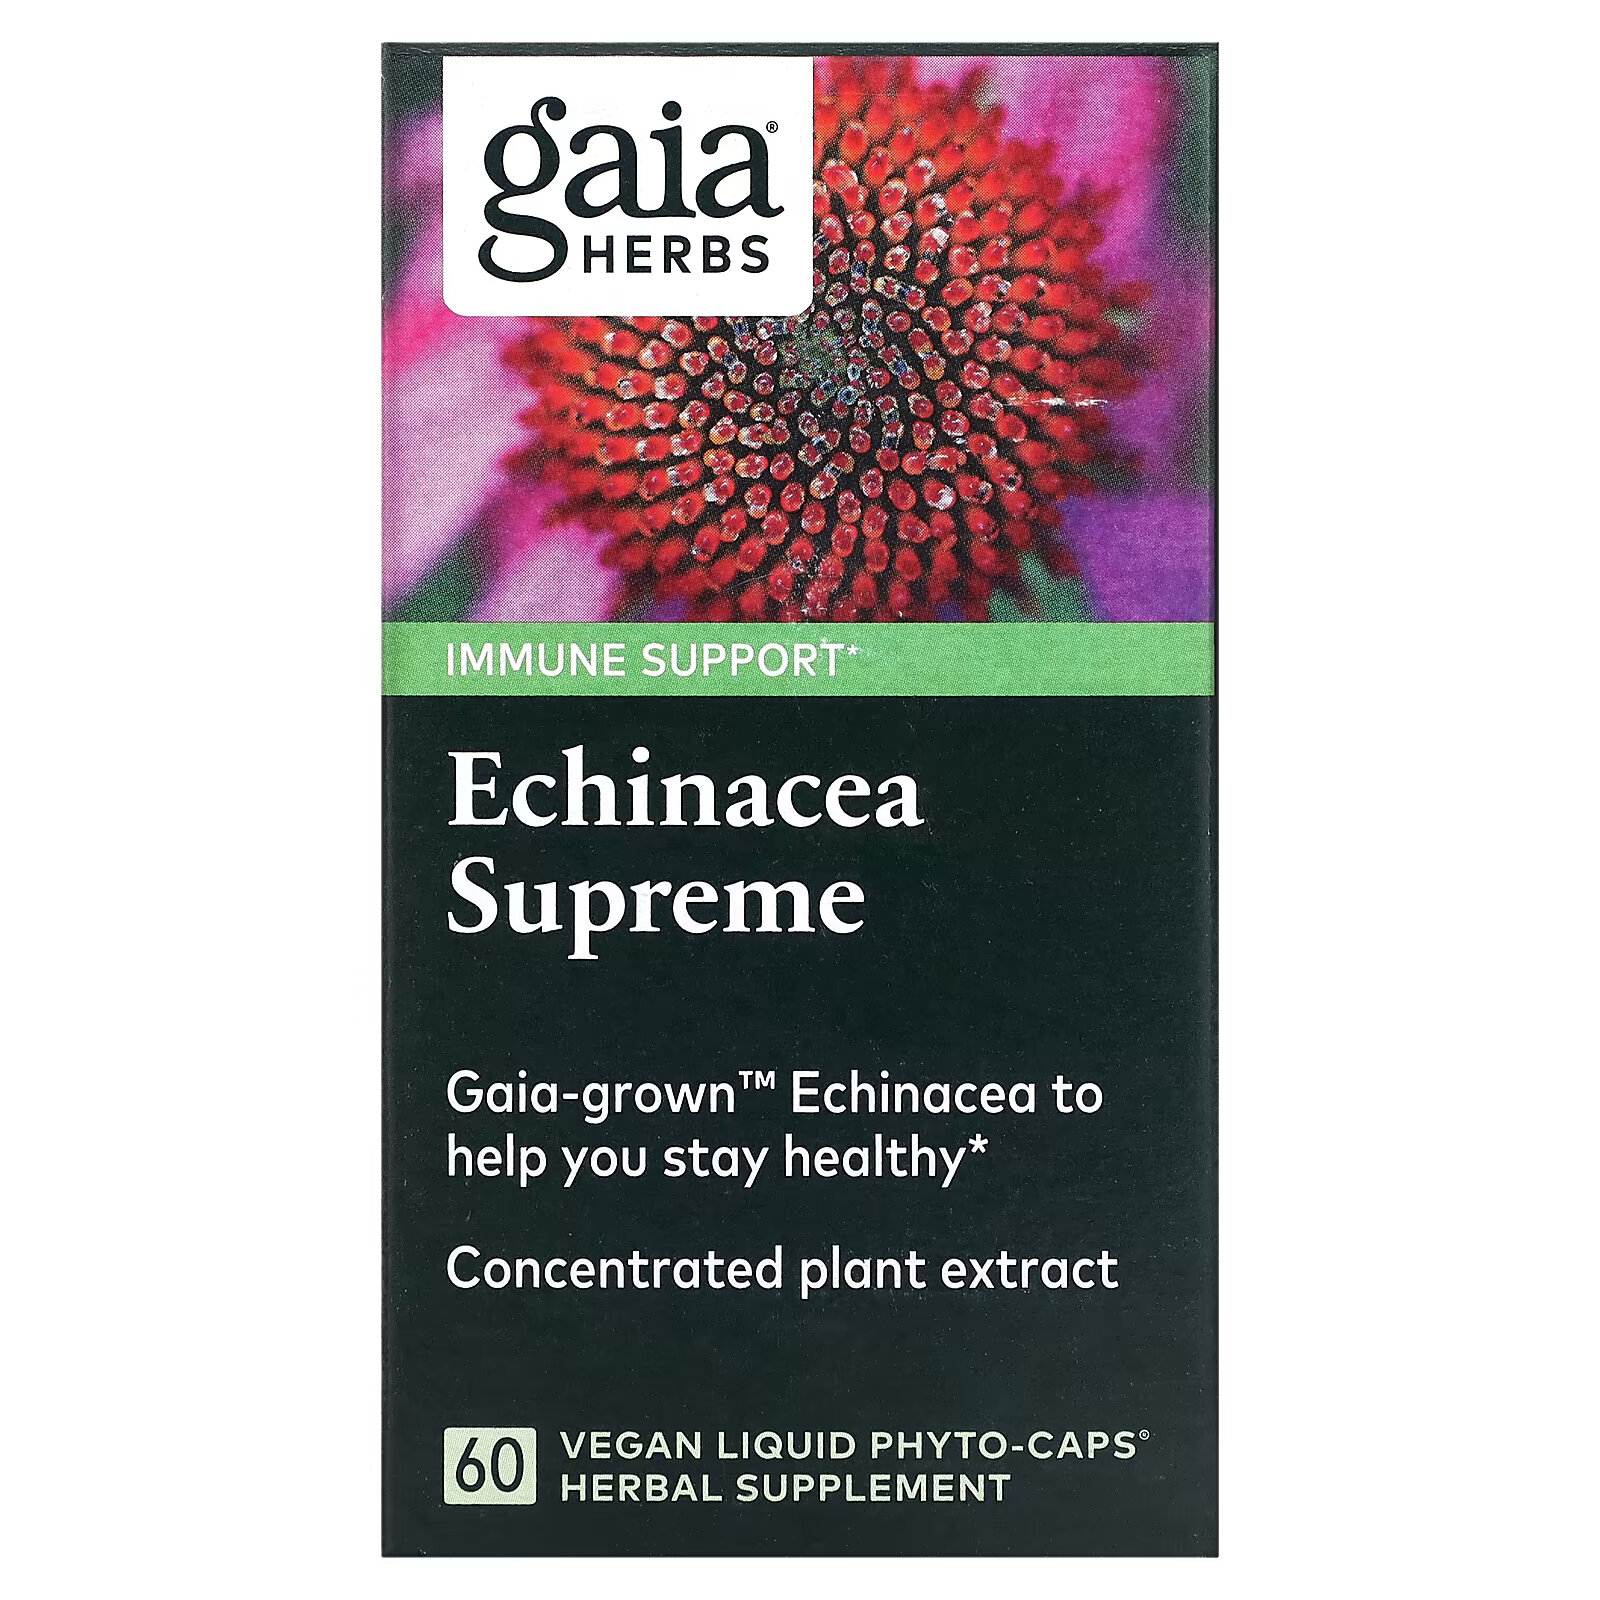 Gaia Herbs, Echinacea Supreme, 60 вегетарианских фито-капсул с жидкостью gaia herbs sleepthru 60 растительных фито капсул с жидкостью